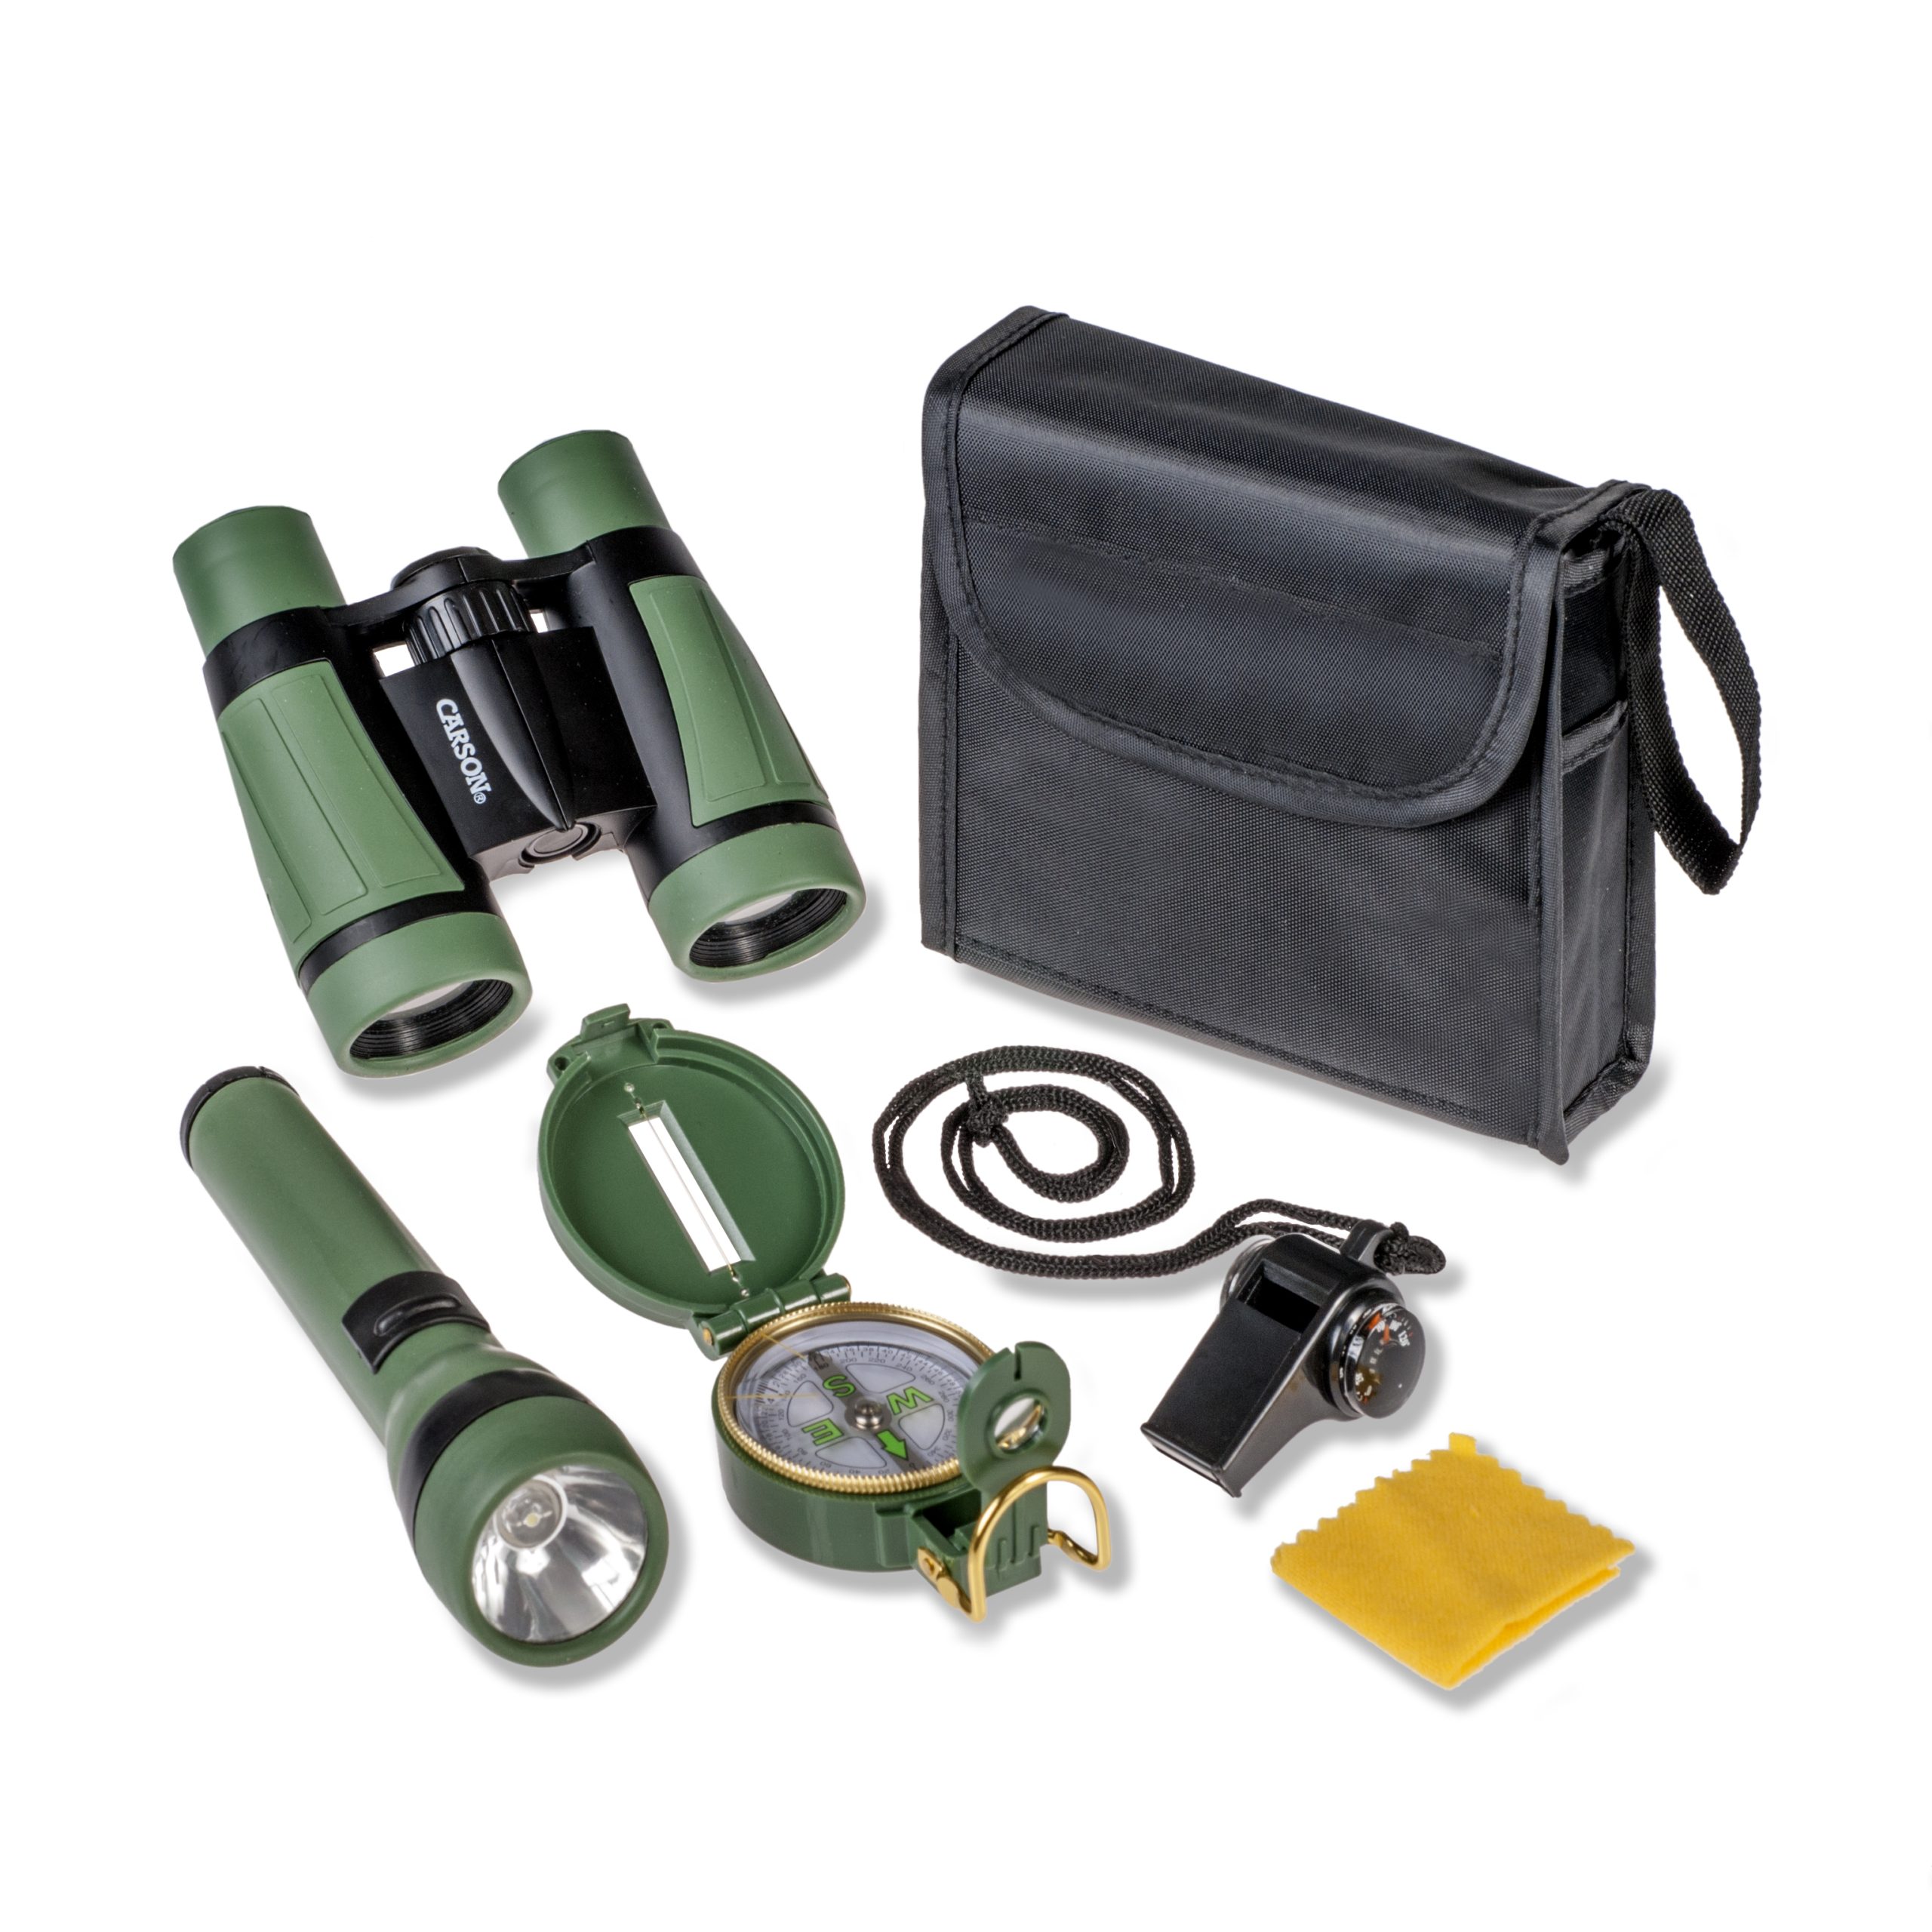 AdventurePak™ Educational Exploration Tool Kit Bundle for Kids